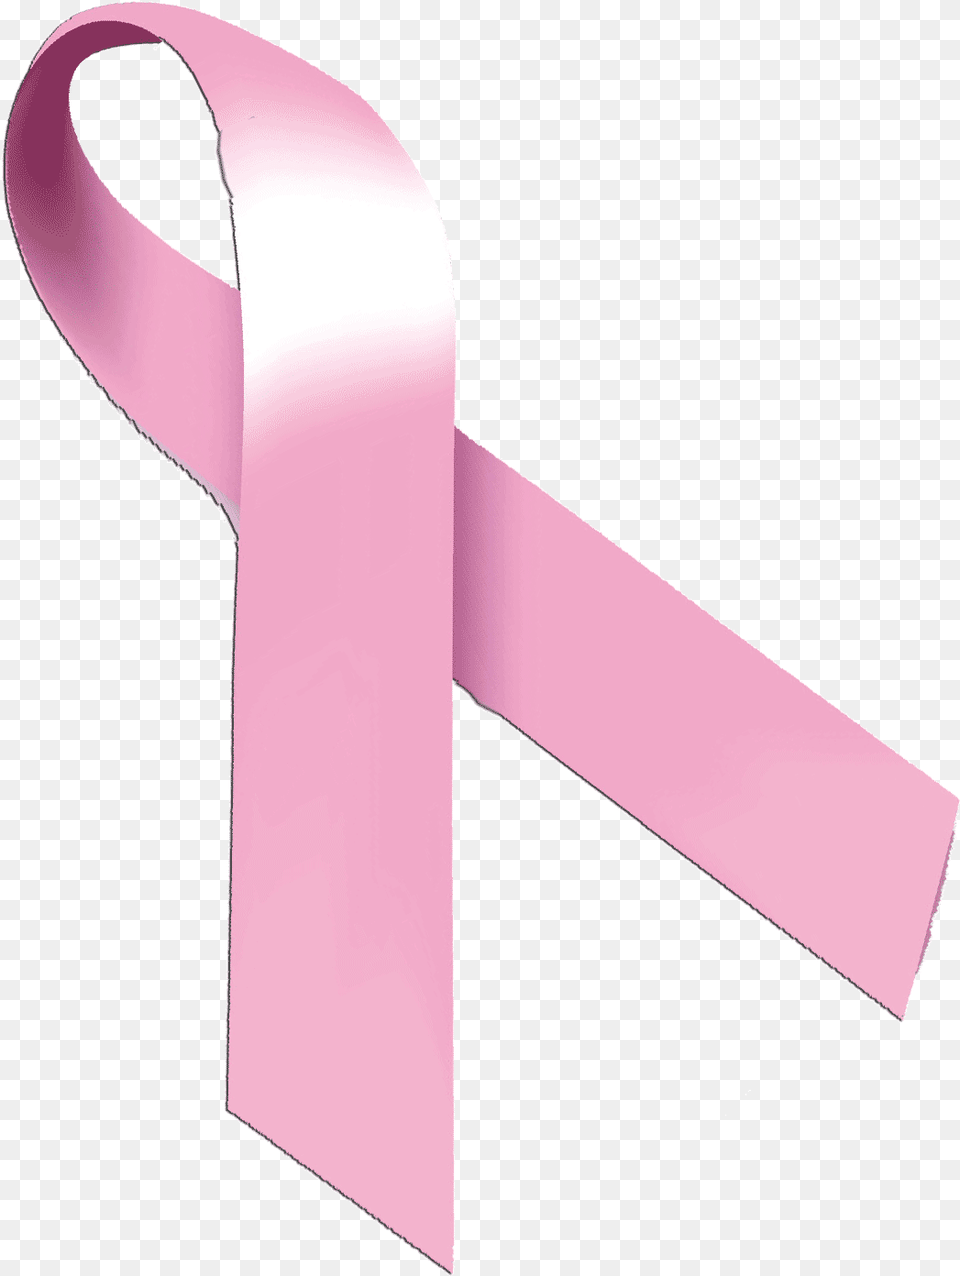 Pink Ribbon Background Image Transparent Background Breast Cancer Ribbon, Accessories, Formal Wear, Tie, Belt Png